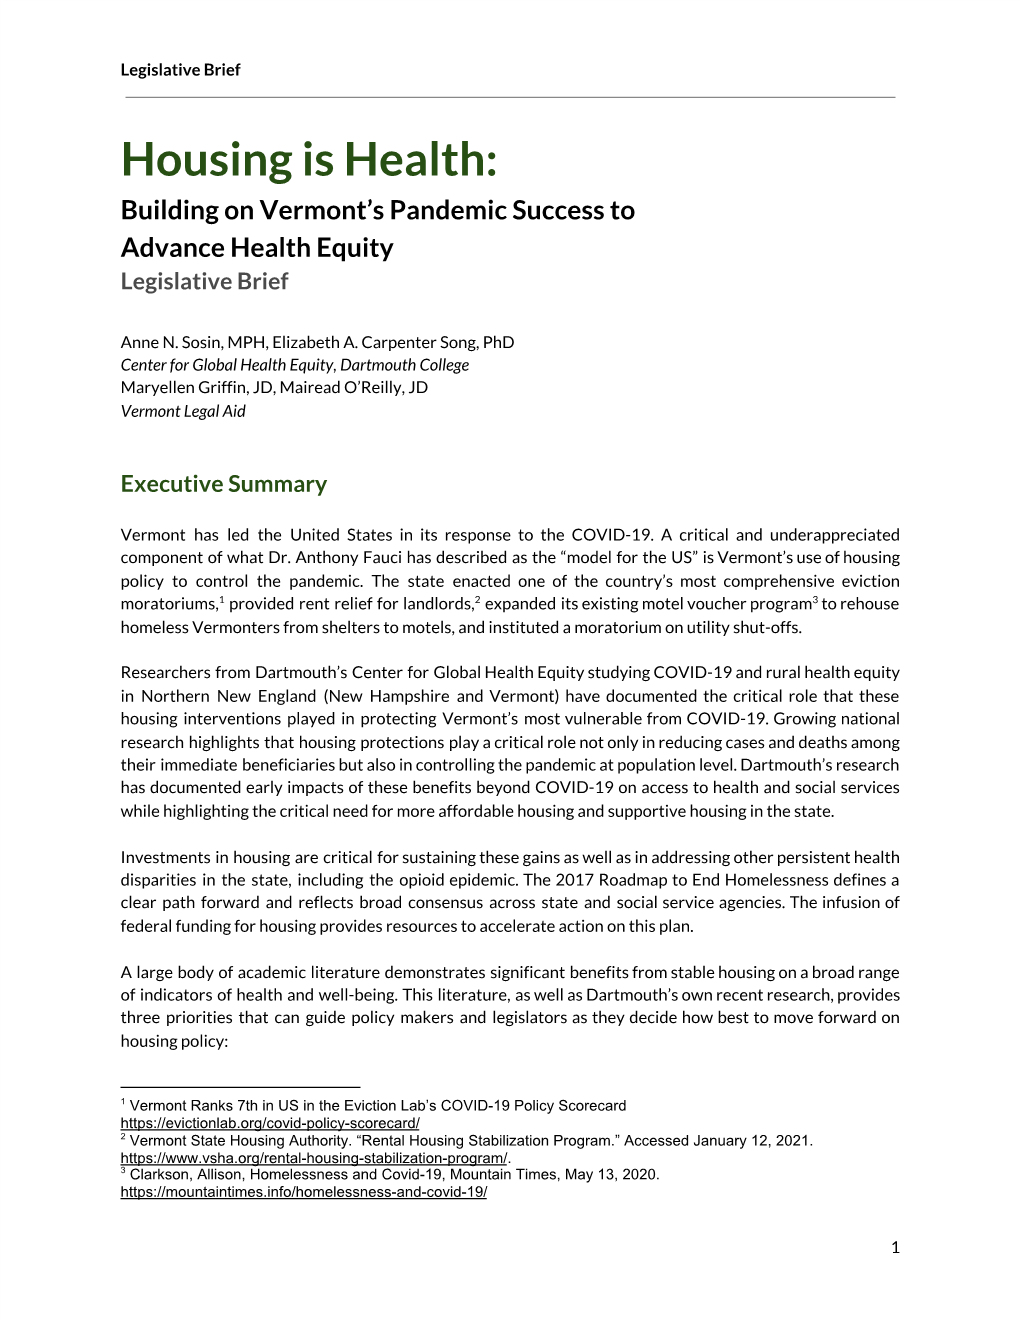 Housing Is Health Legislative Brief